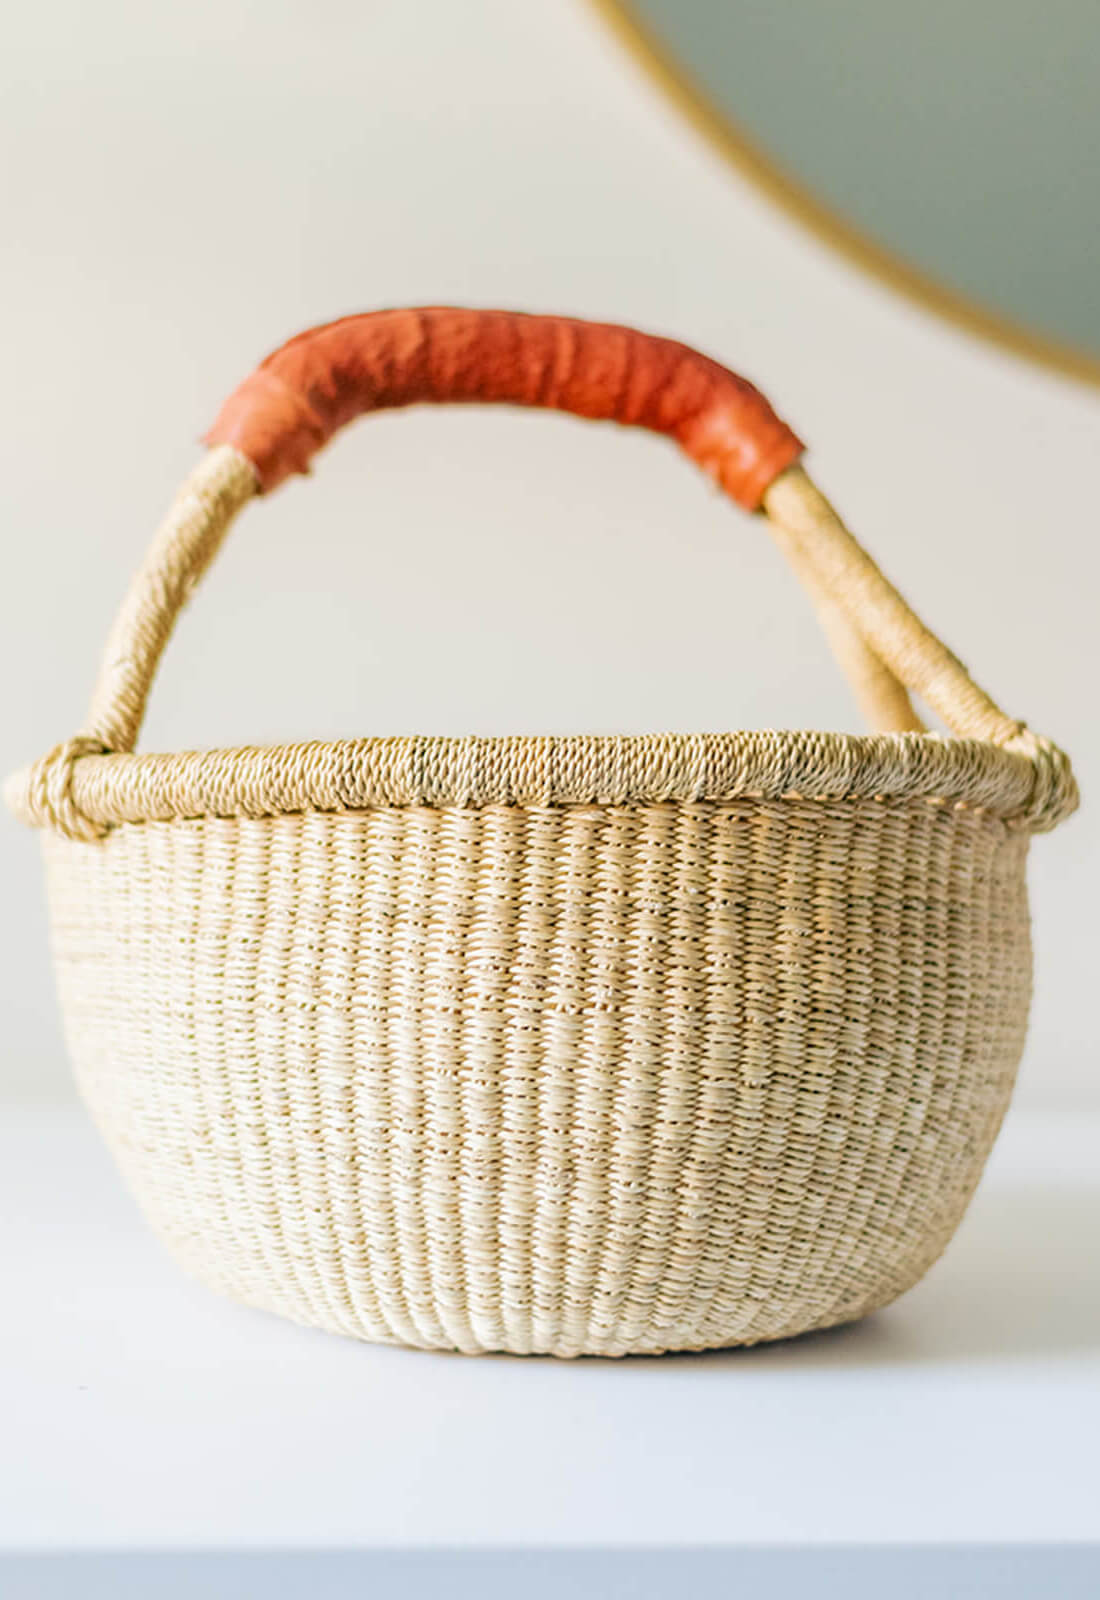 Mini bolga basket, made in Ghana. Shown in a bedroom used as storage.